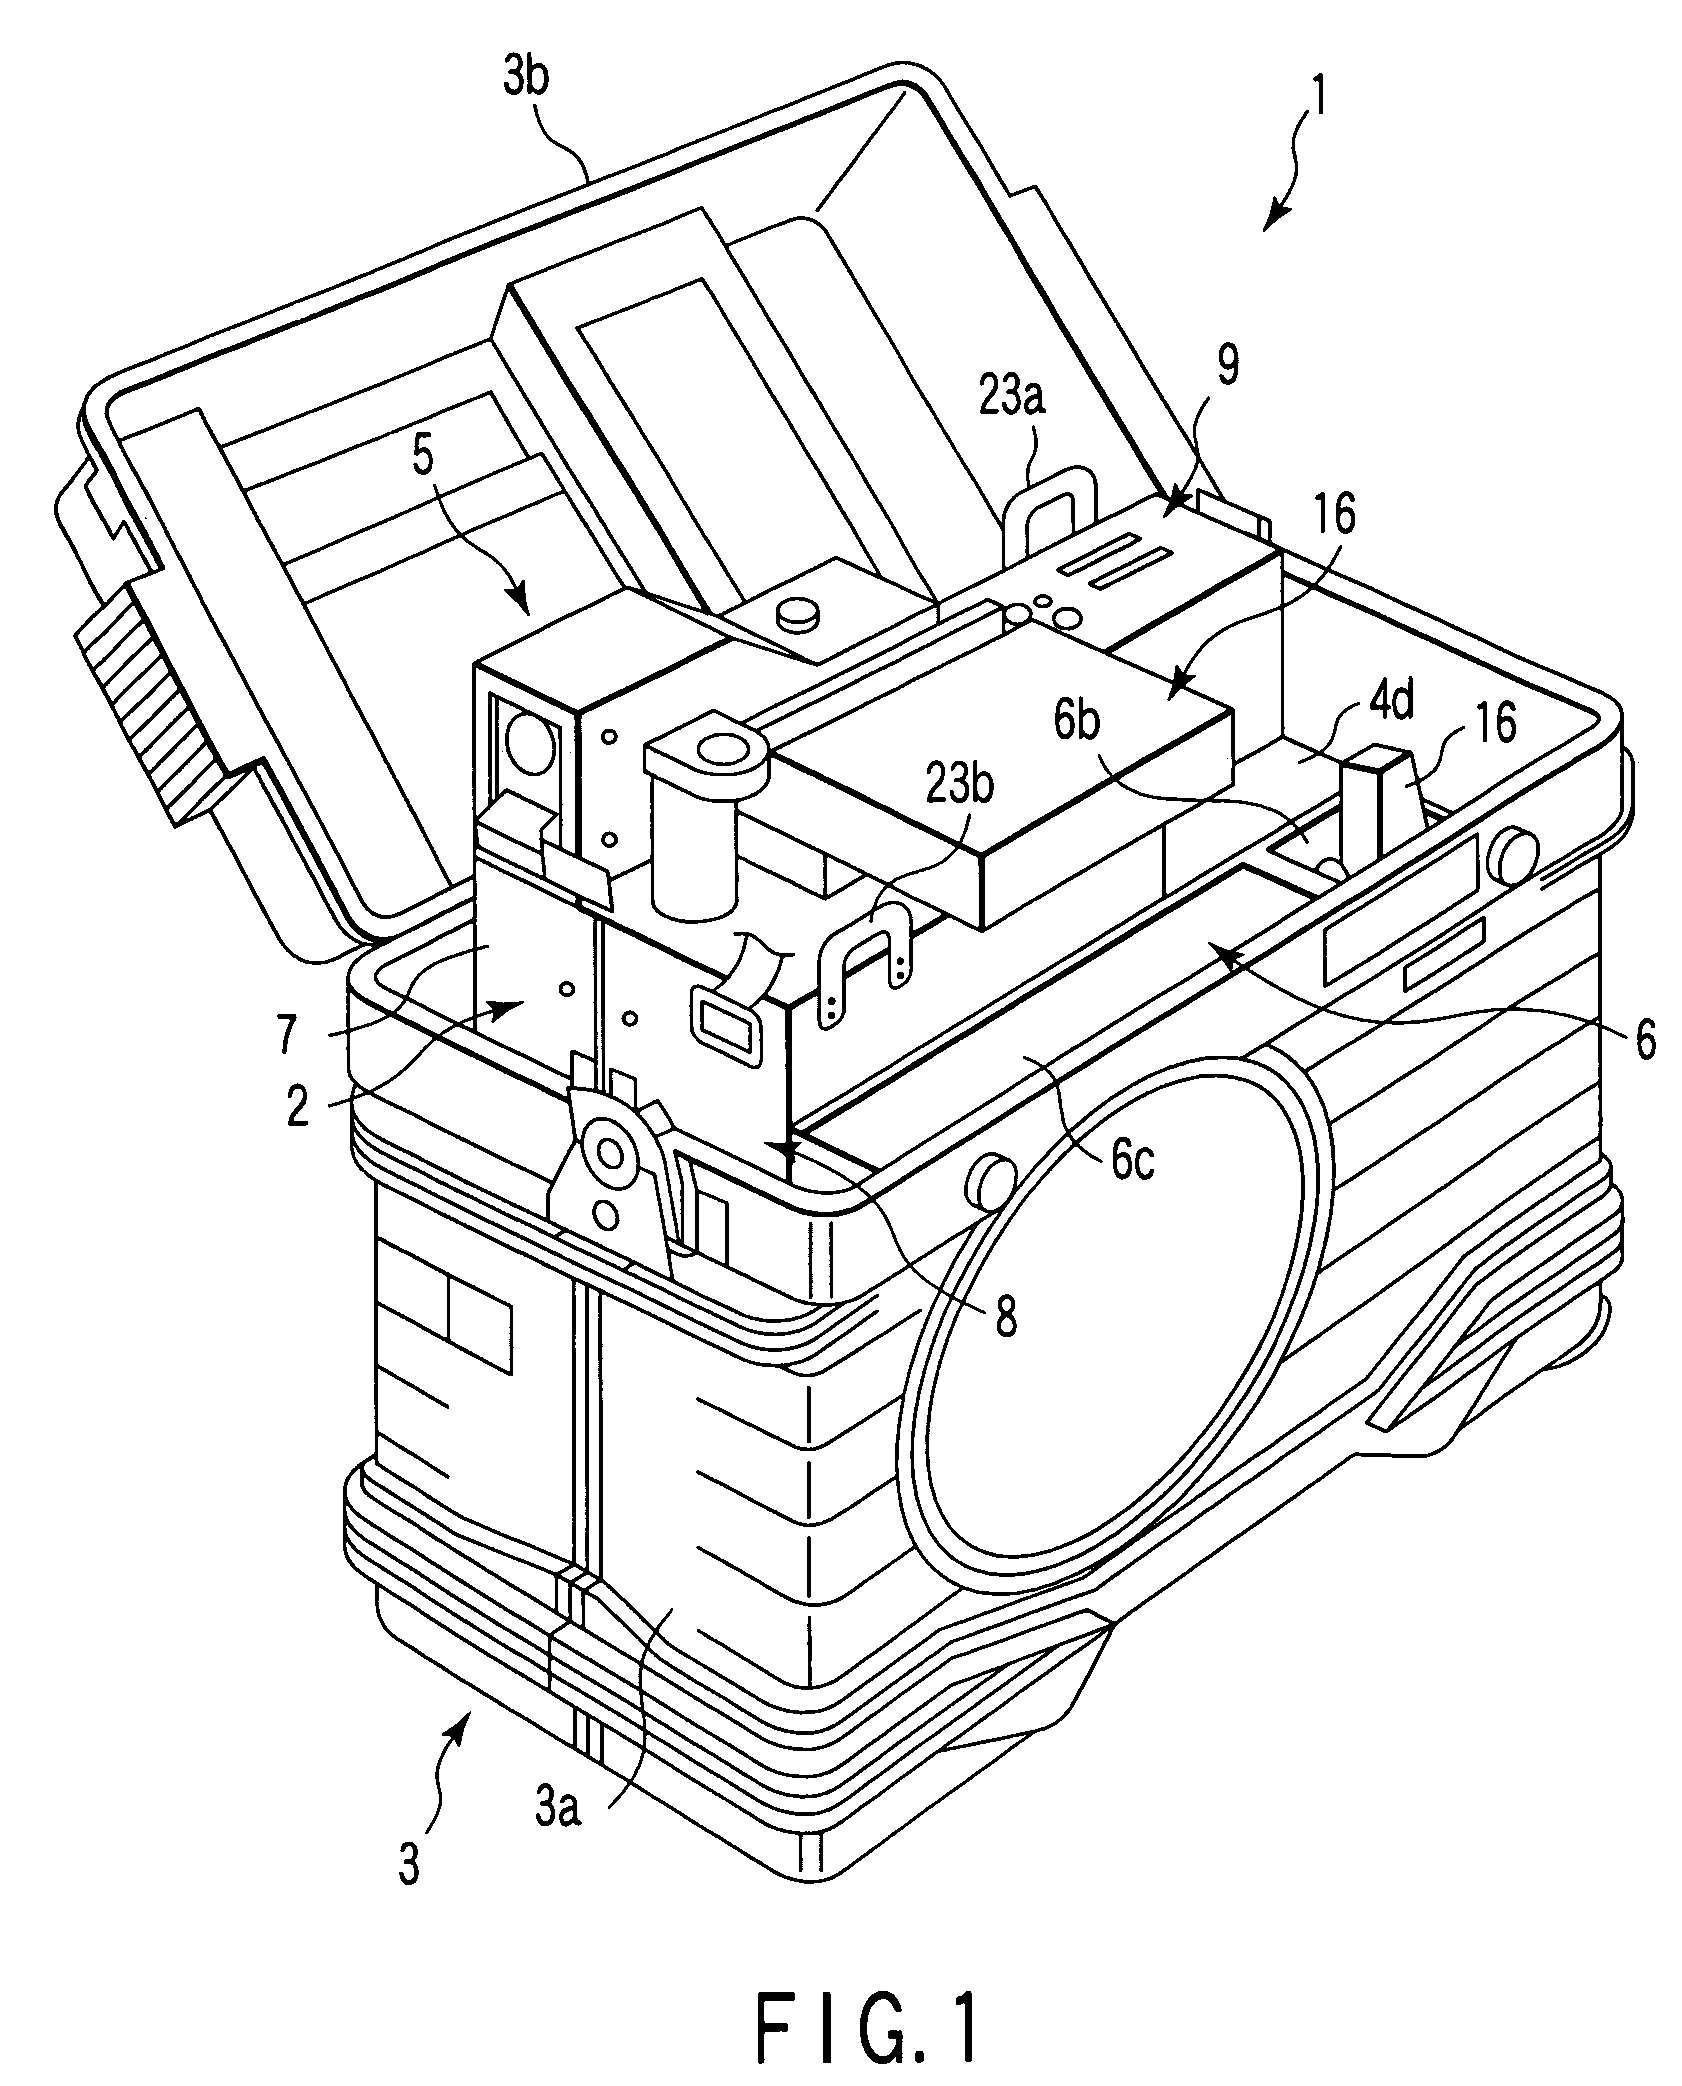 Endoscope apparatus having an internal channel